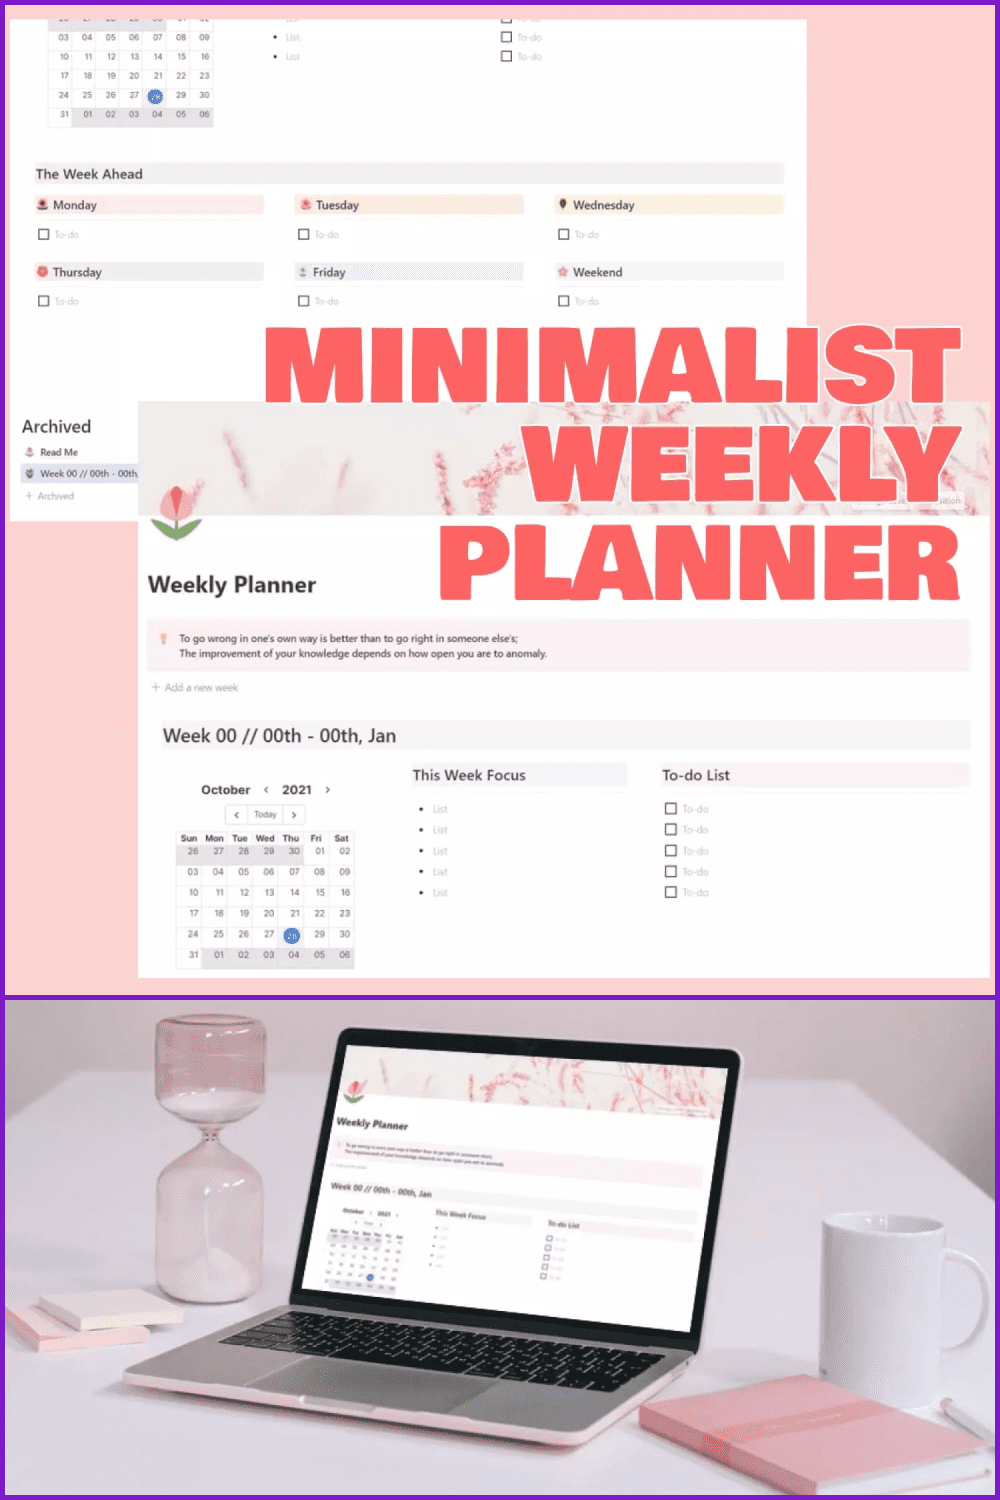 Minimalist Weekly Planner (Notion weekly planner templates).